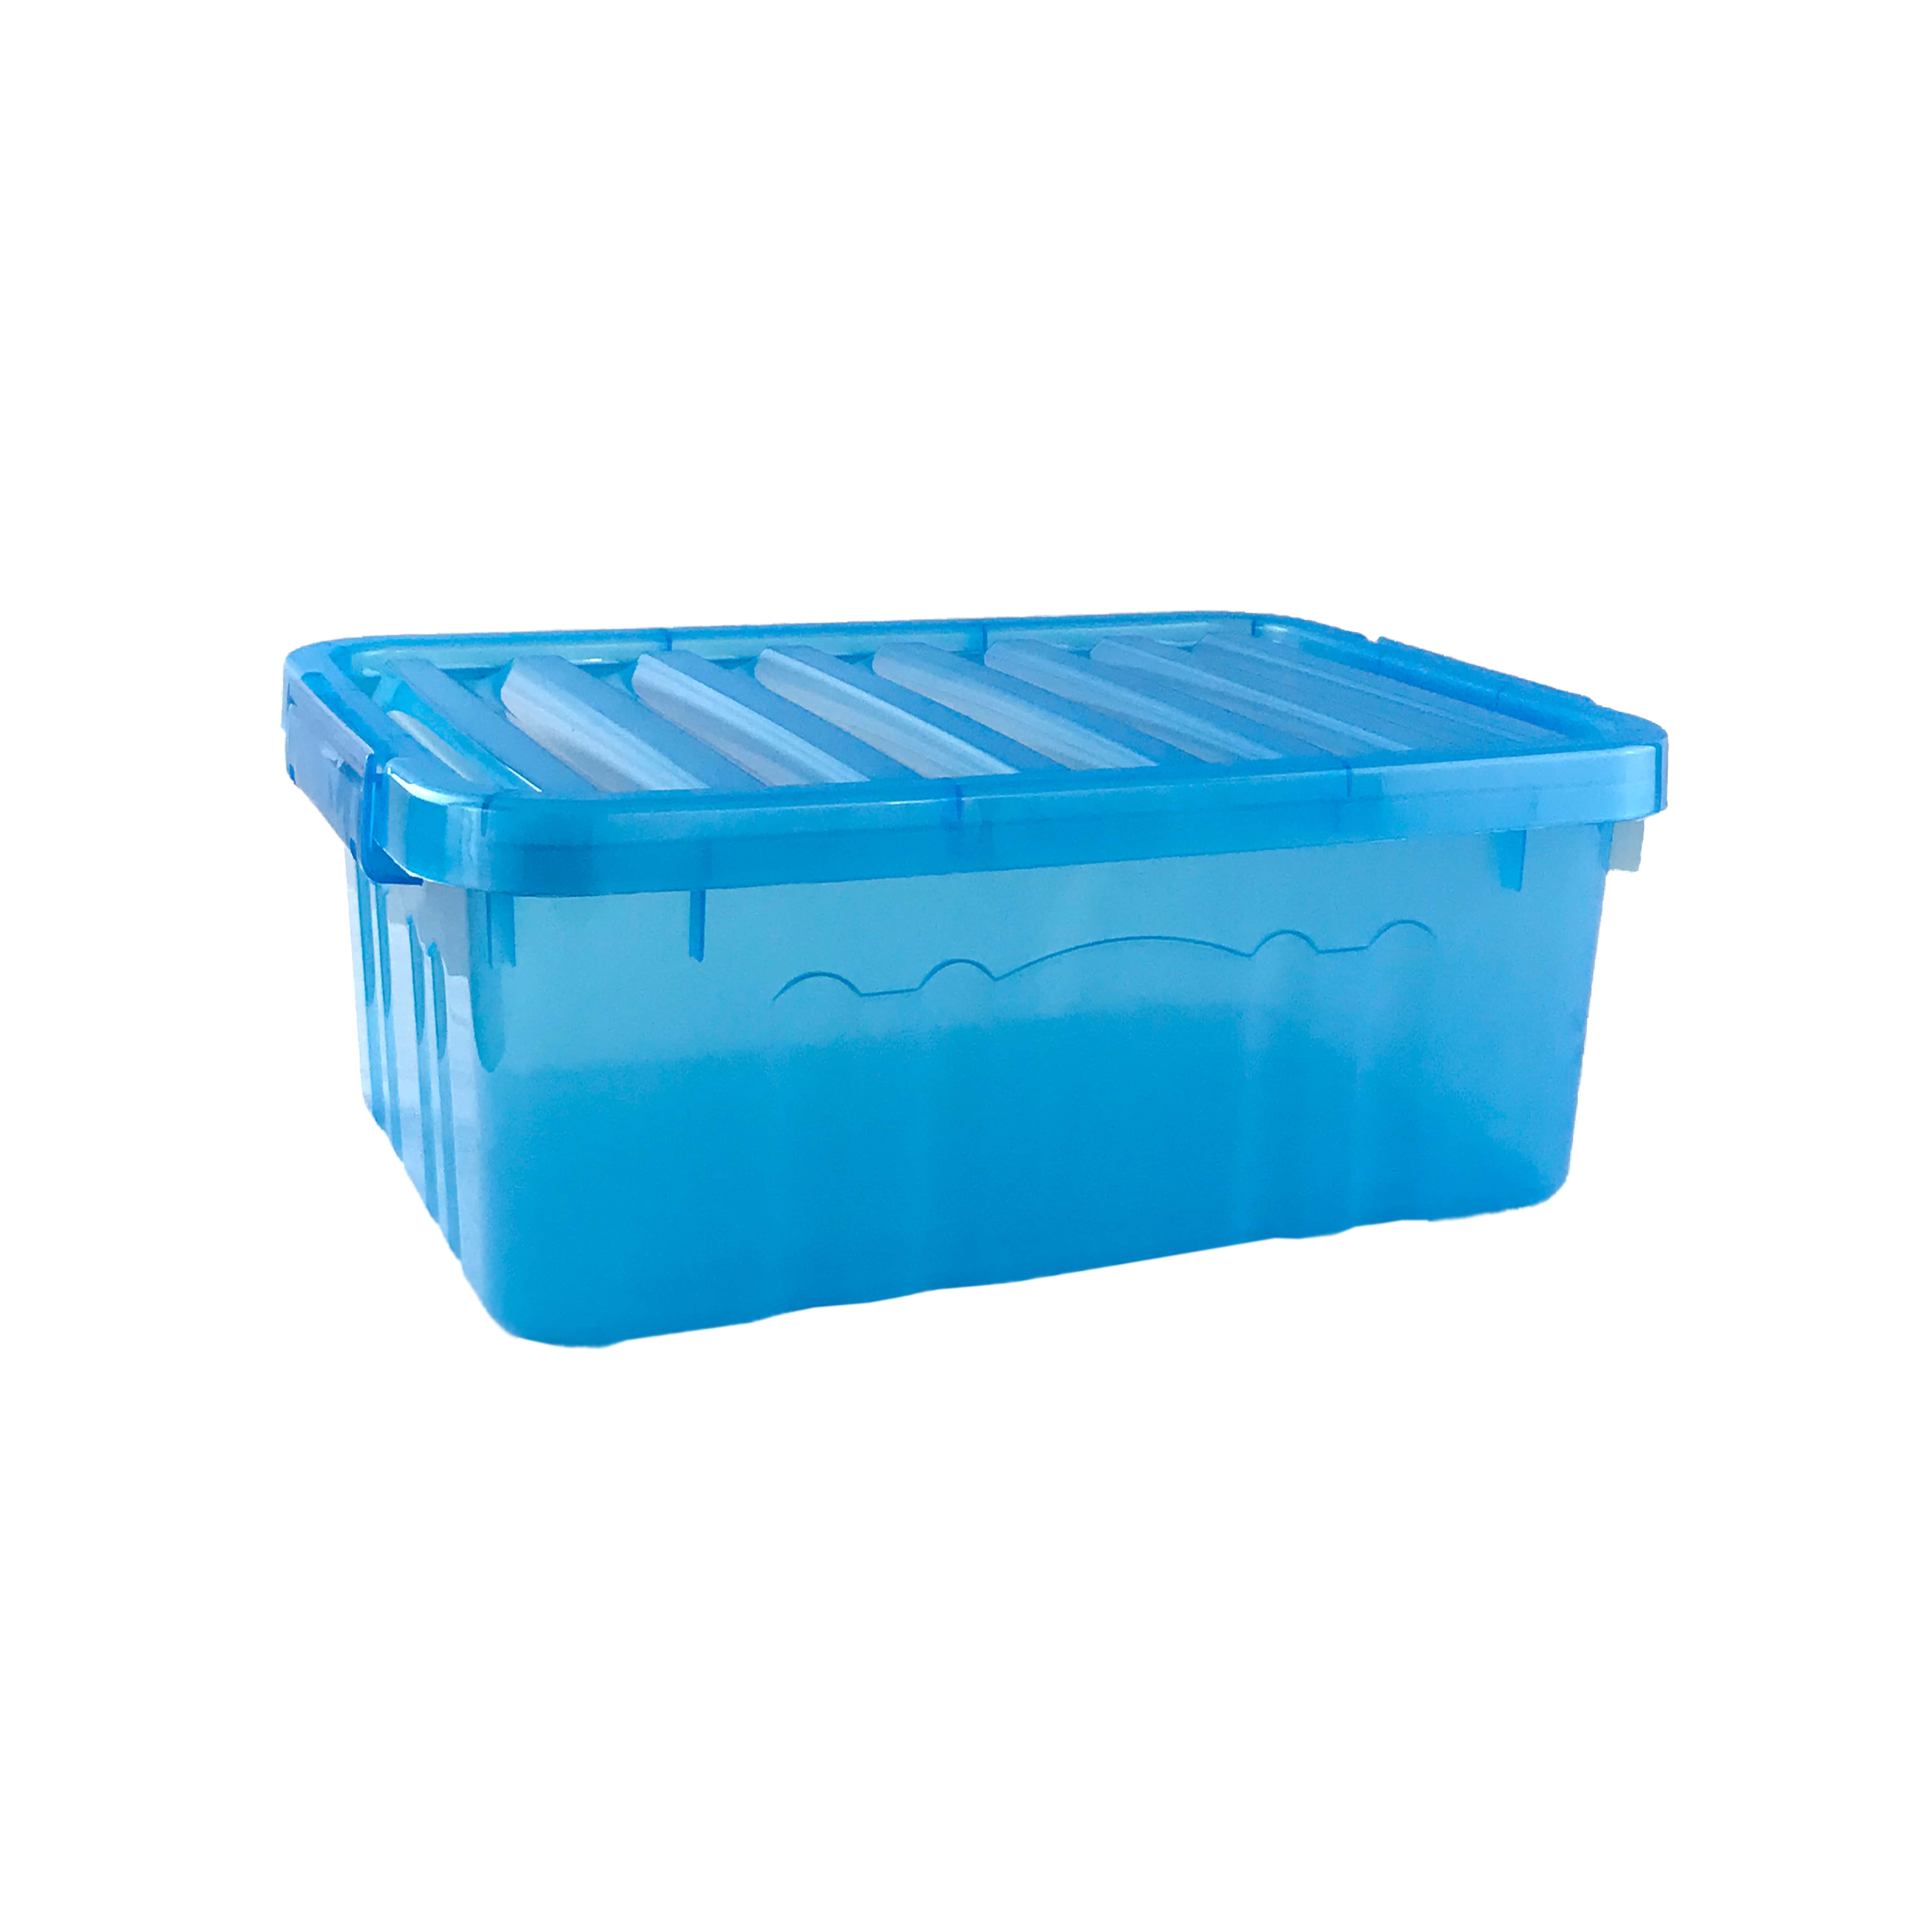  Caixa Multiuso Azul - 30 Litros